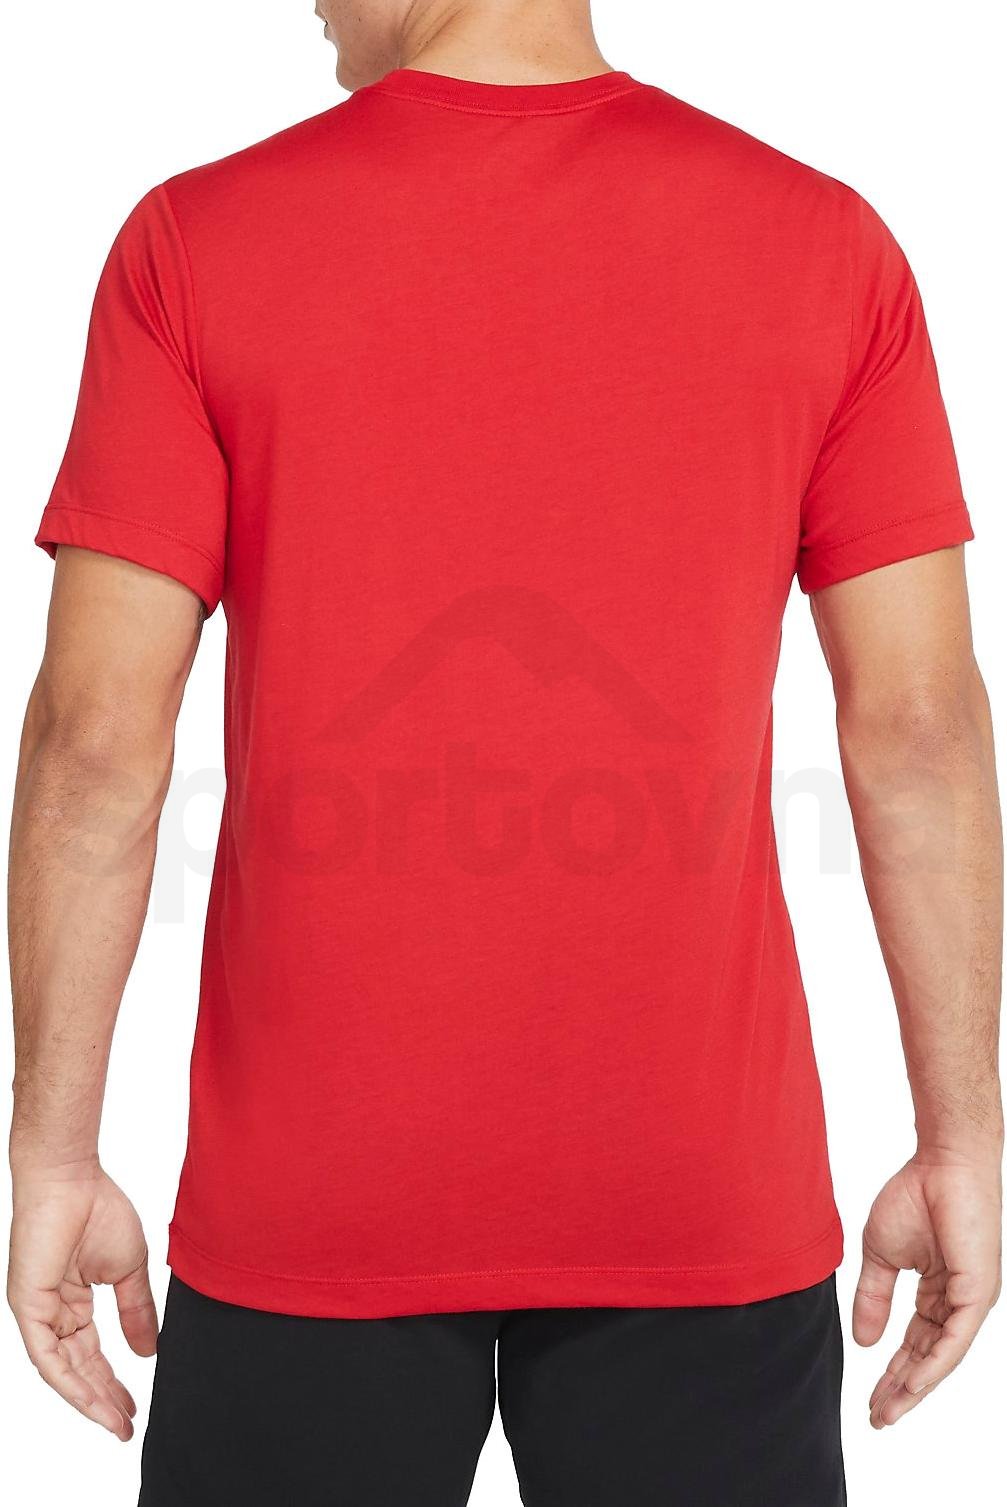 Tričko Nike Pro Tee M - červená